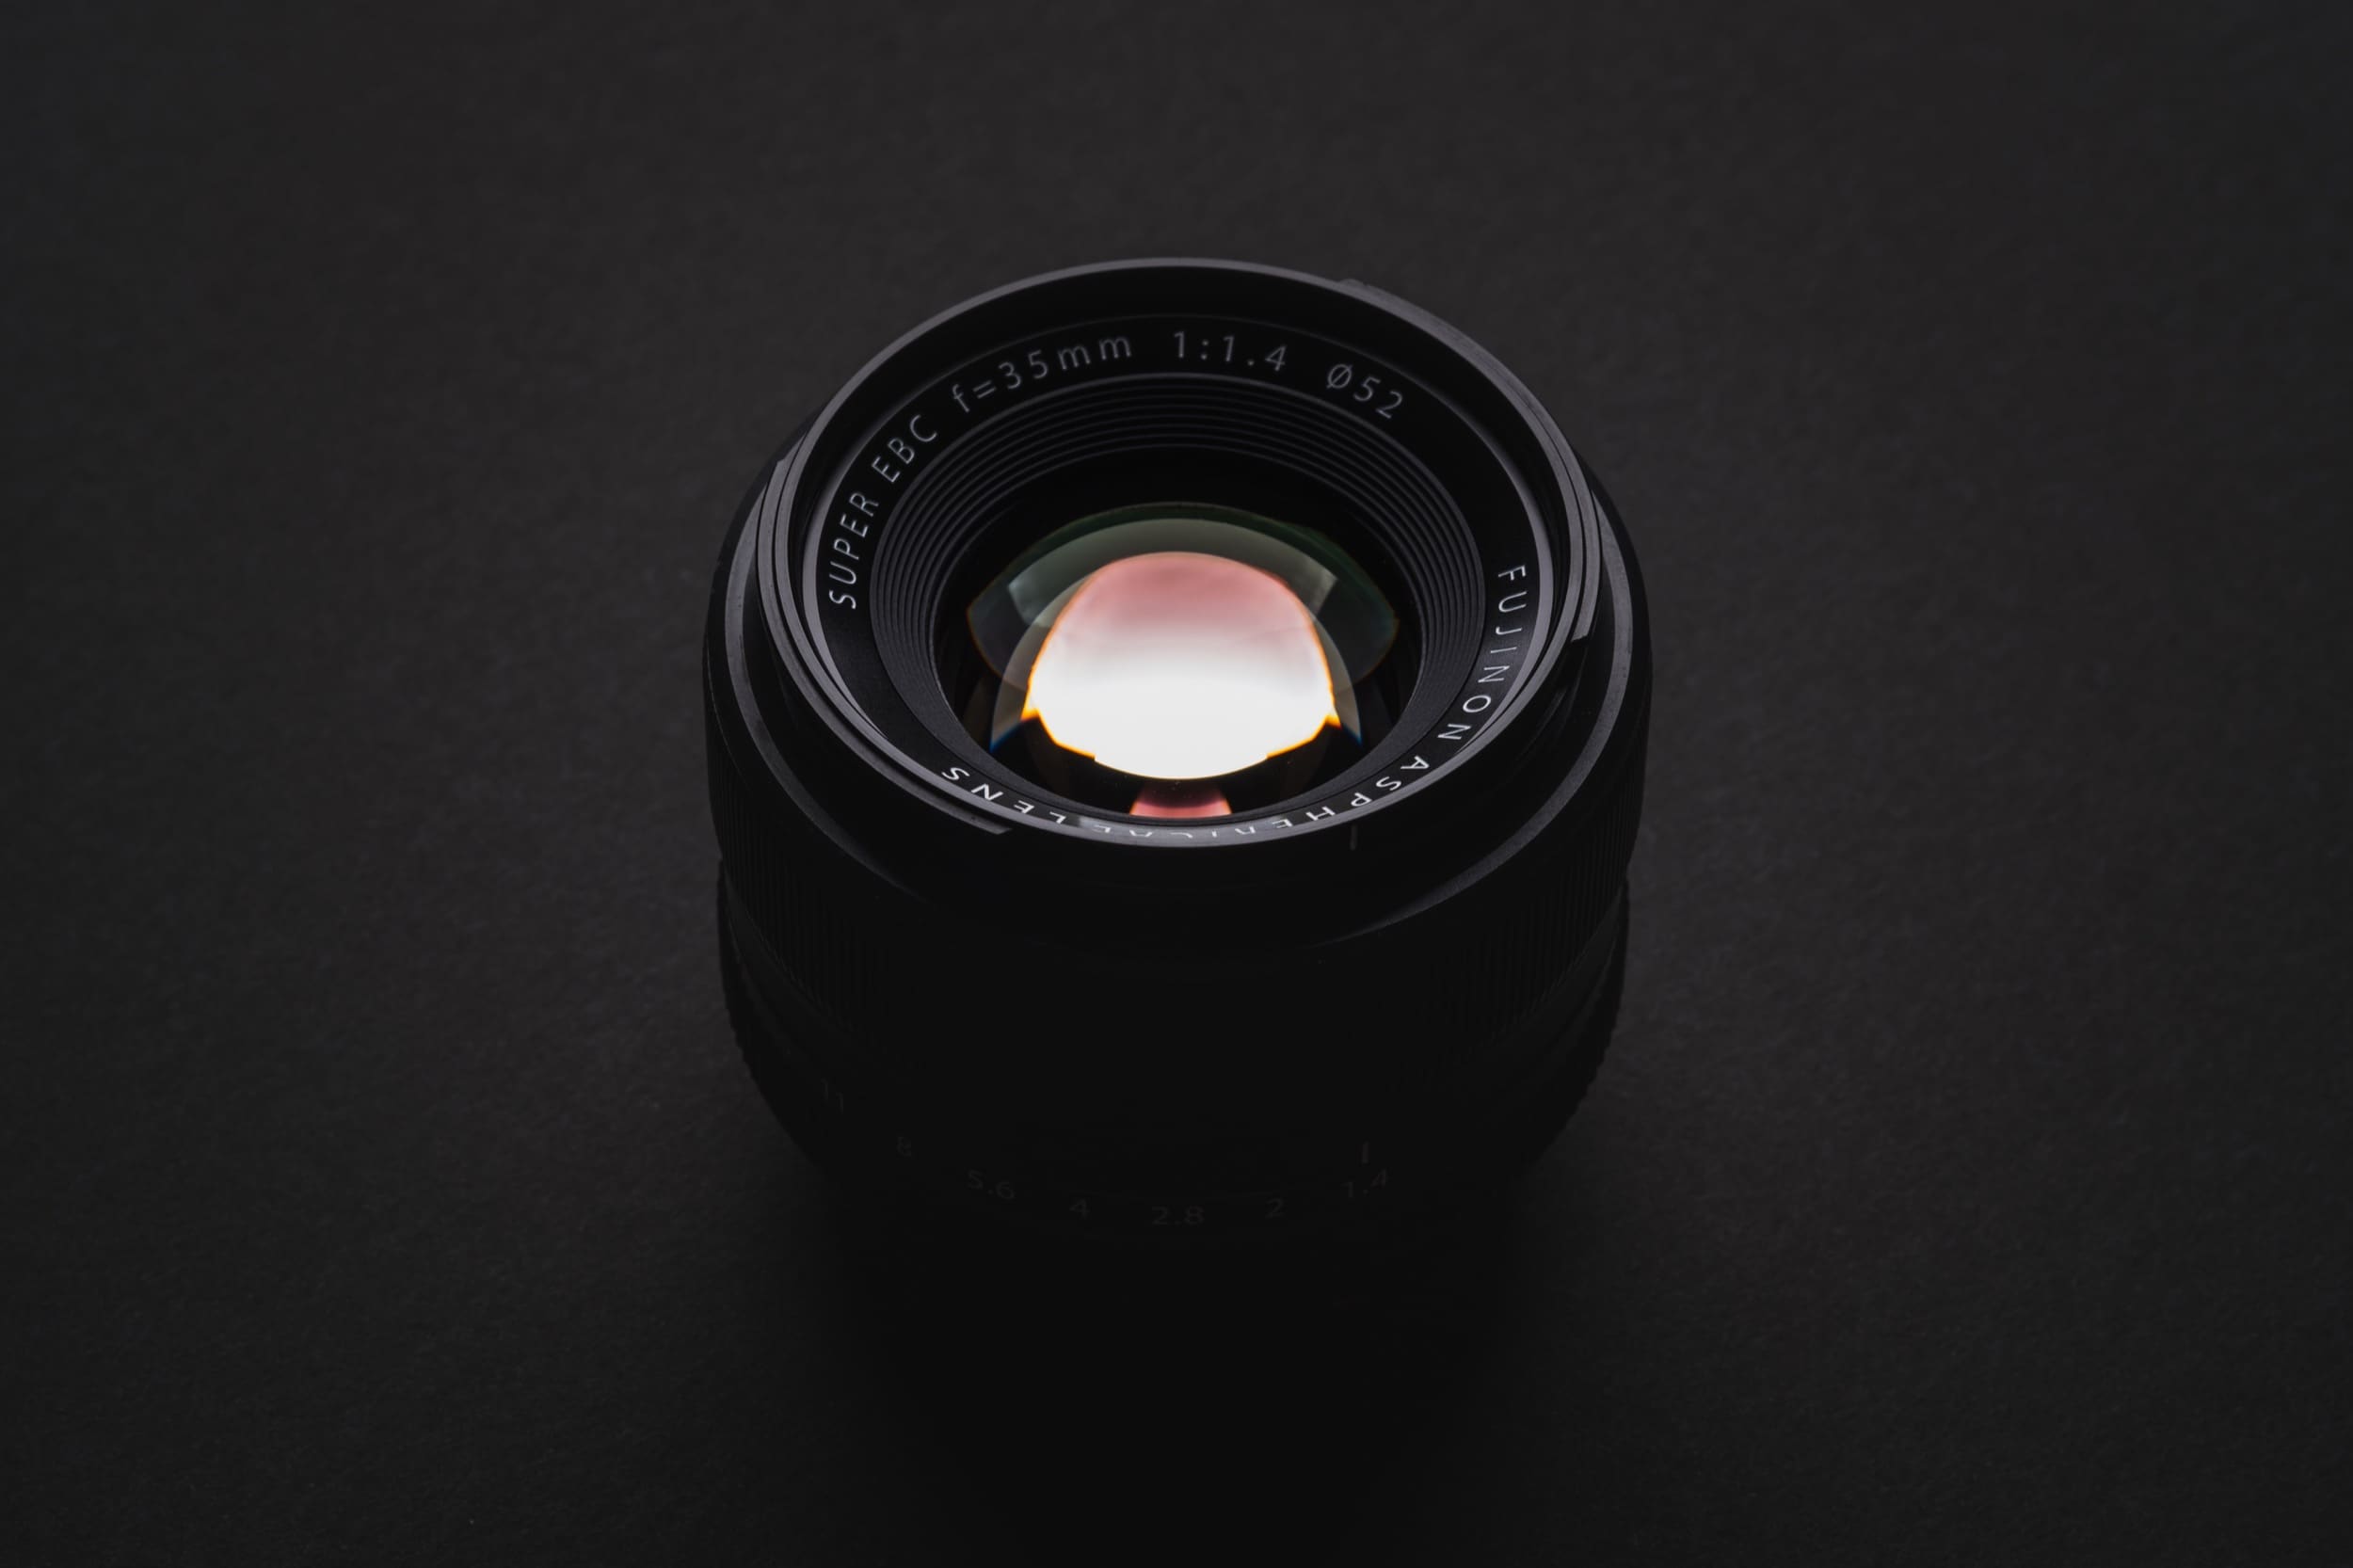 Fuji XF 35mm f/1.4 Lens Review: Is It the Best Fuji Lens? — Shark & Palm